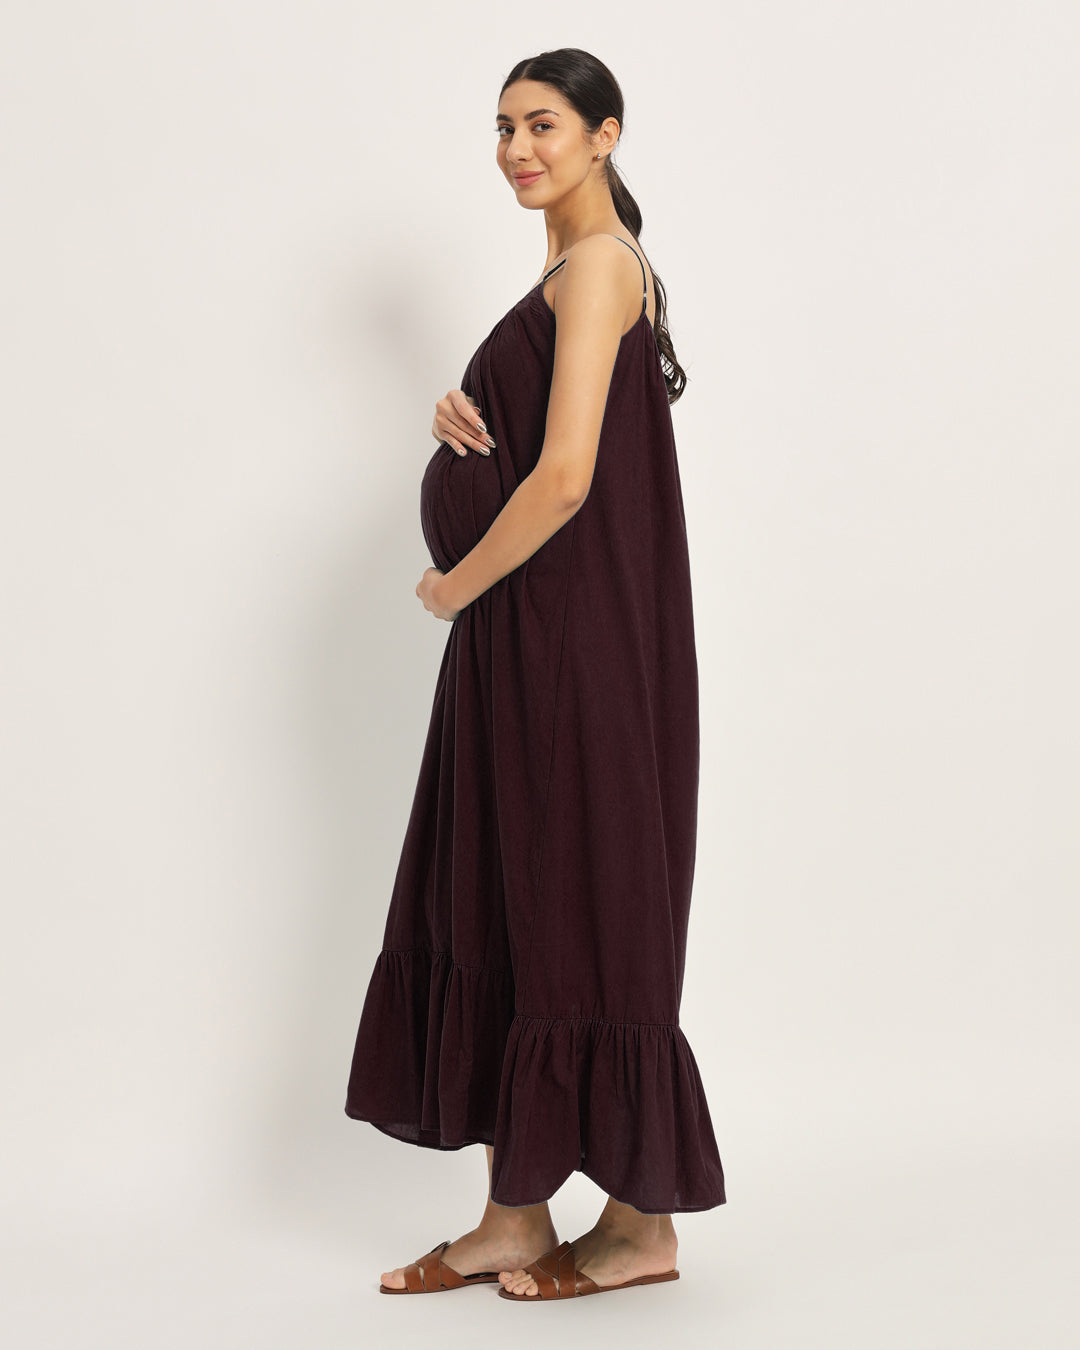 Combo: Plum Passion & Sage Green Belly Laugh Maternity & Nursing Dress - Set of 2